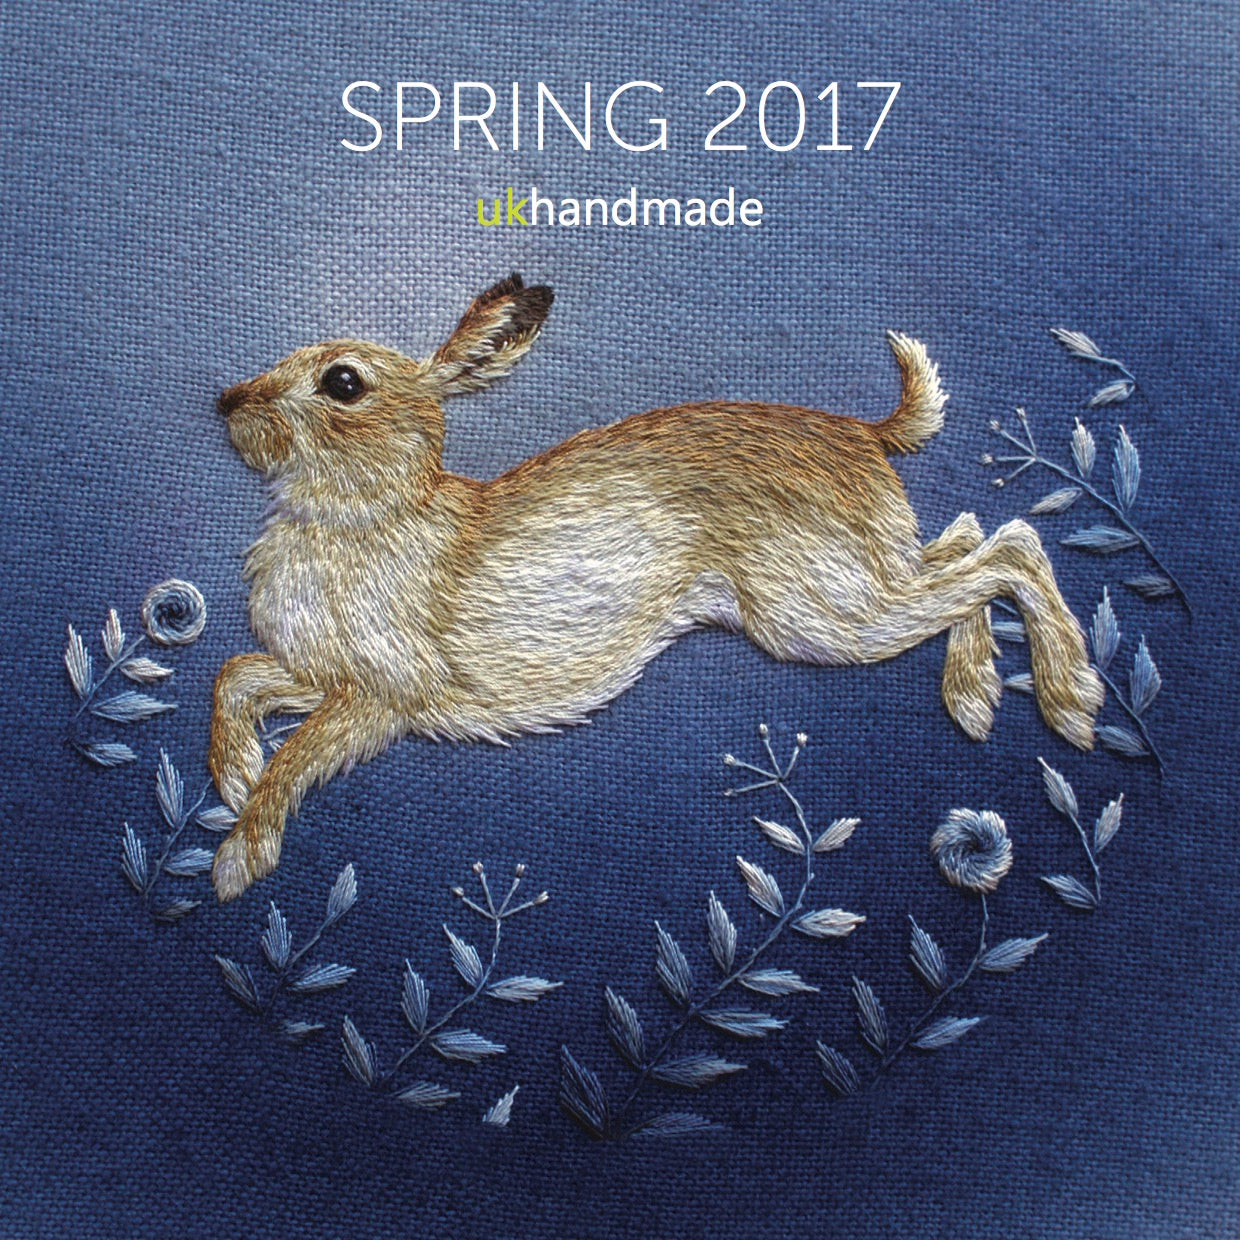 Uk Handmade, Spring 2017